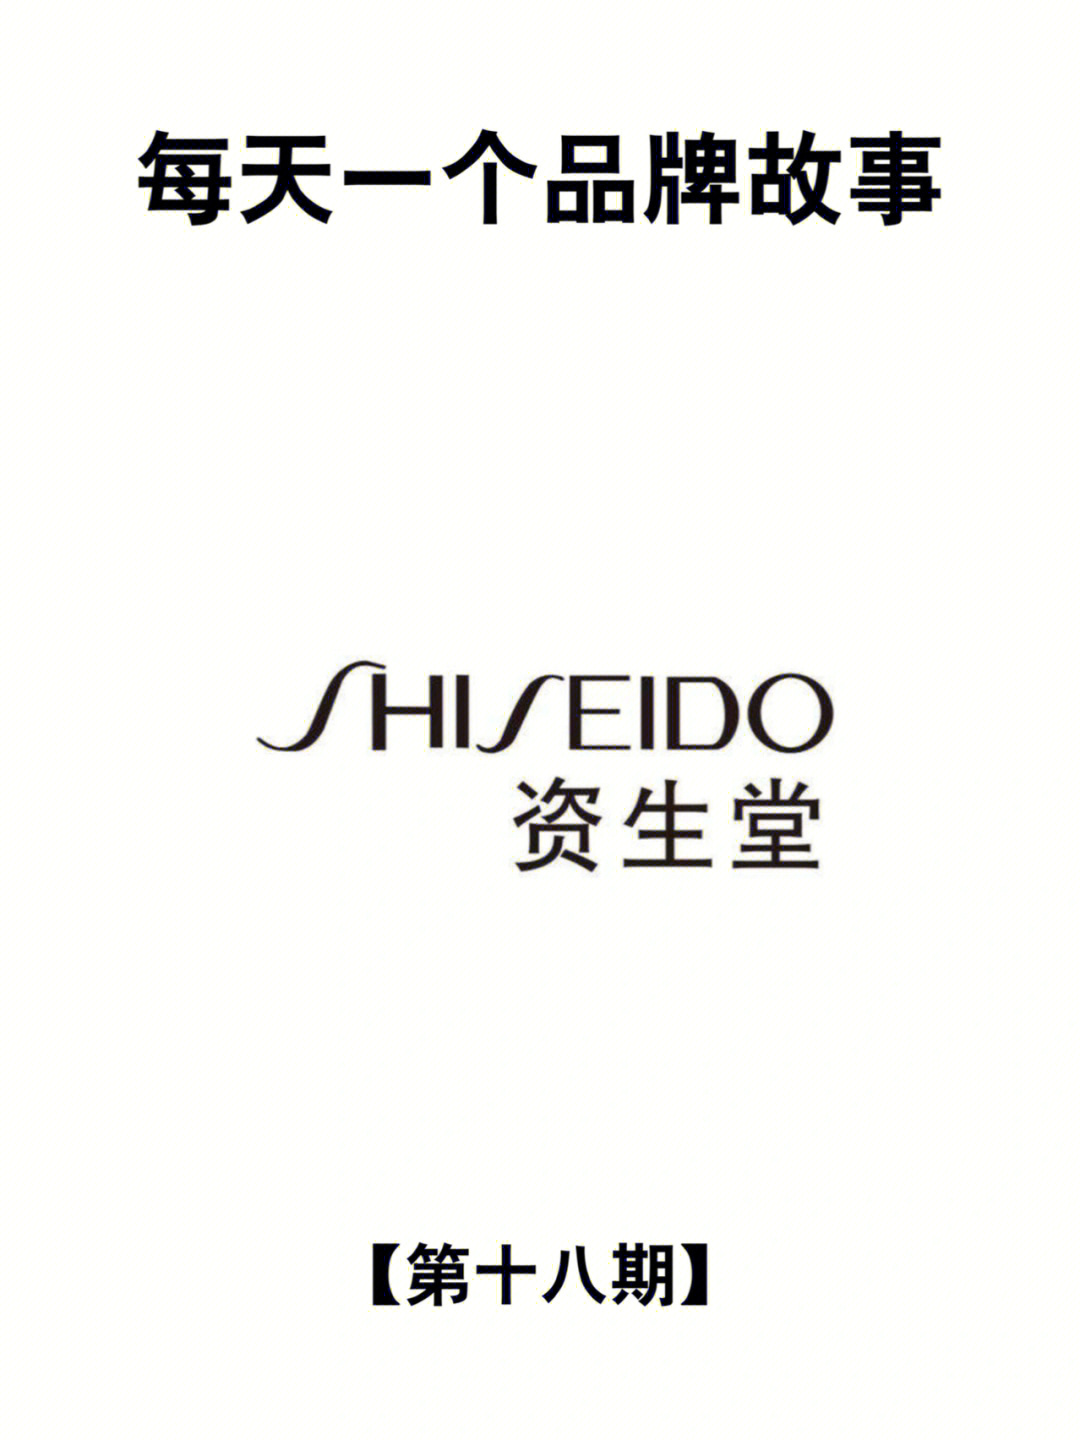 每天一个品牌故事资生堂shiseido